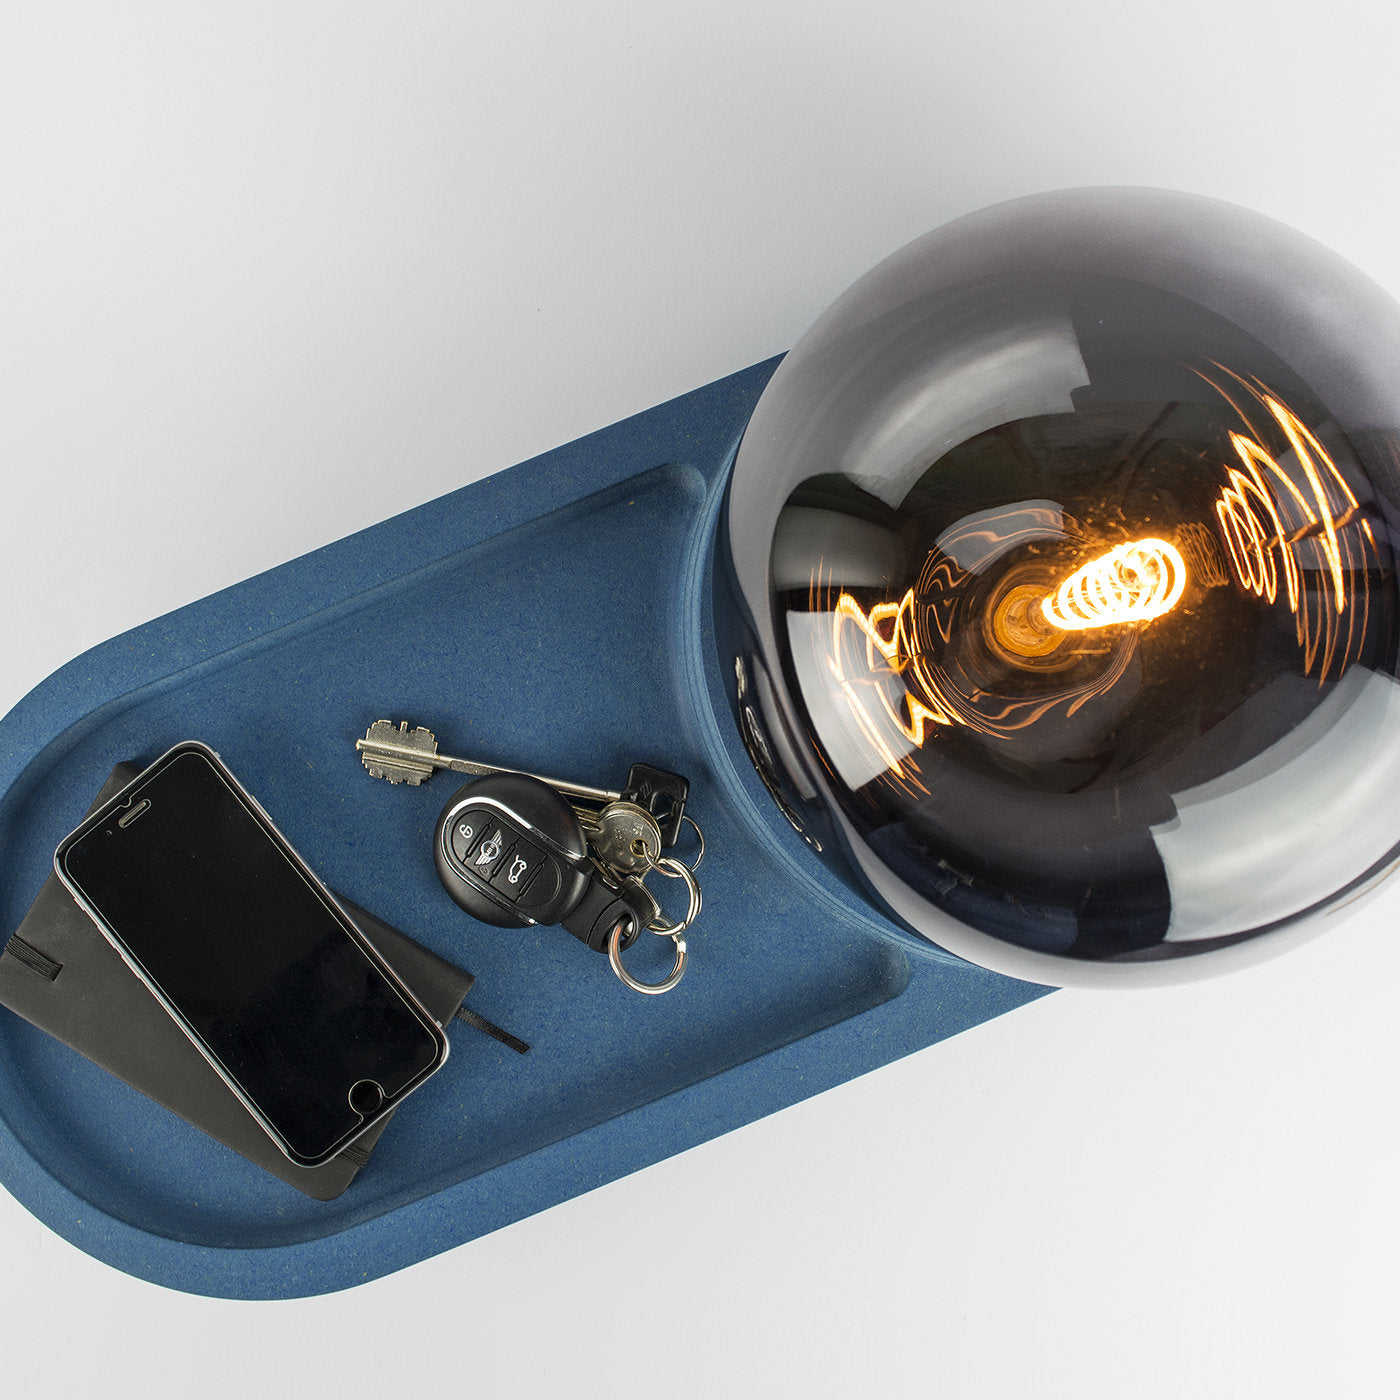 Vessel Blue Table Lamp by Alalda Design - Alternative view 3